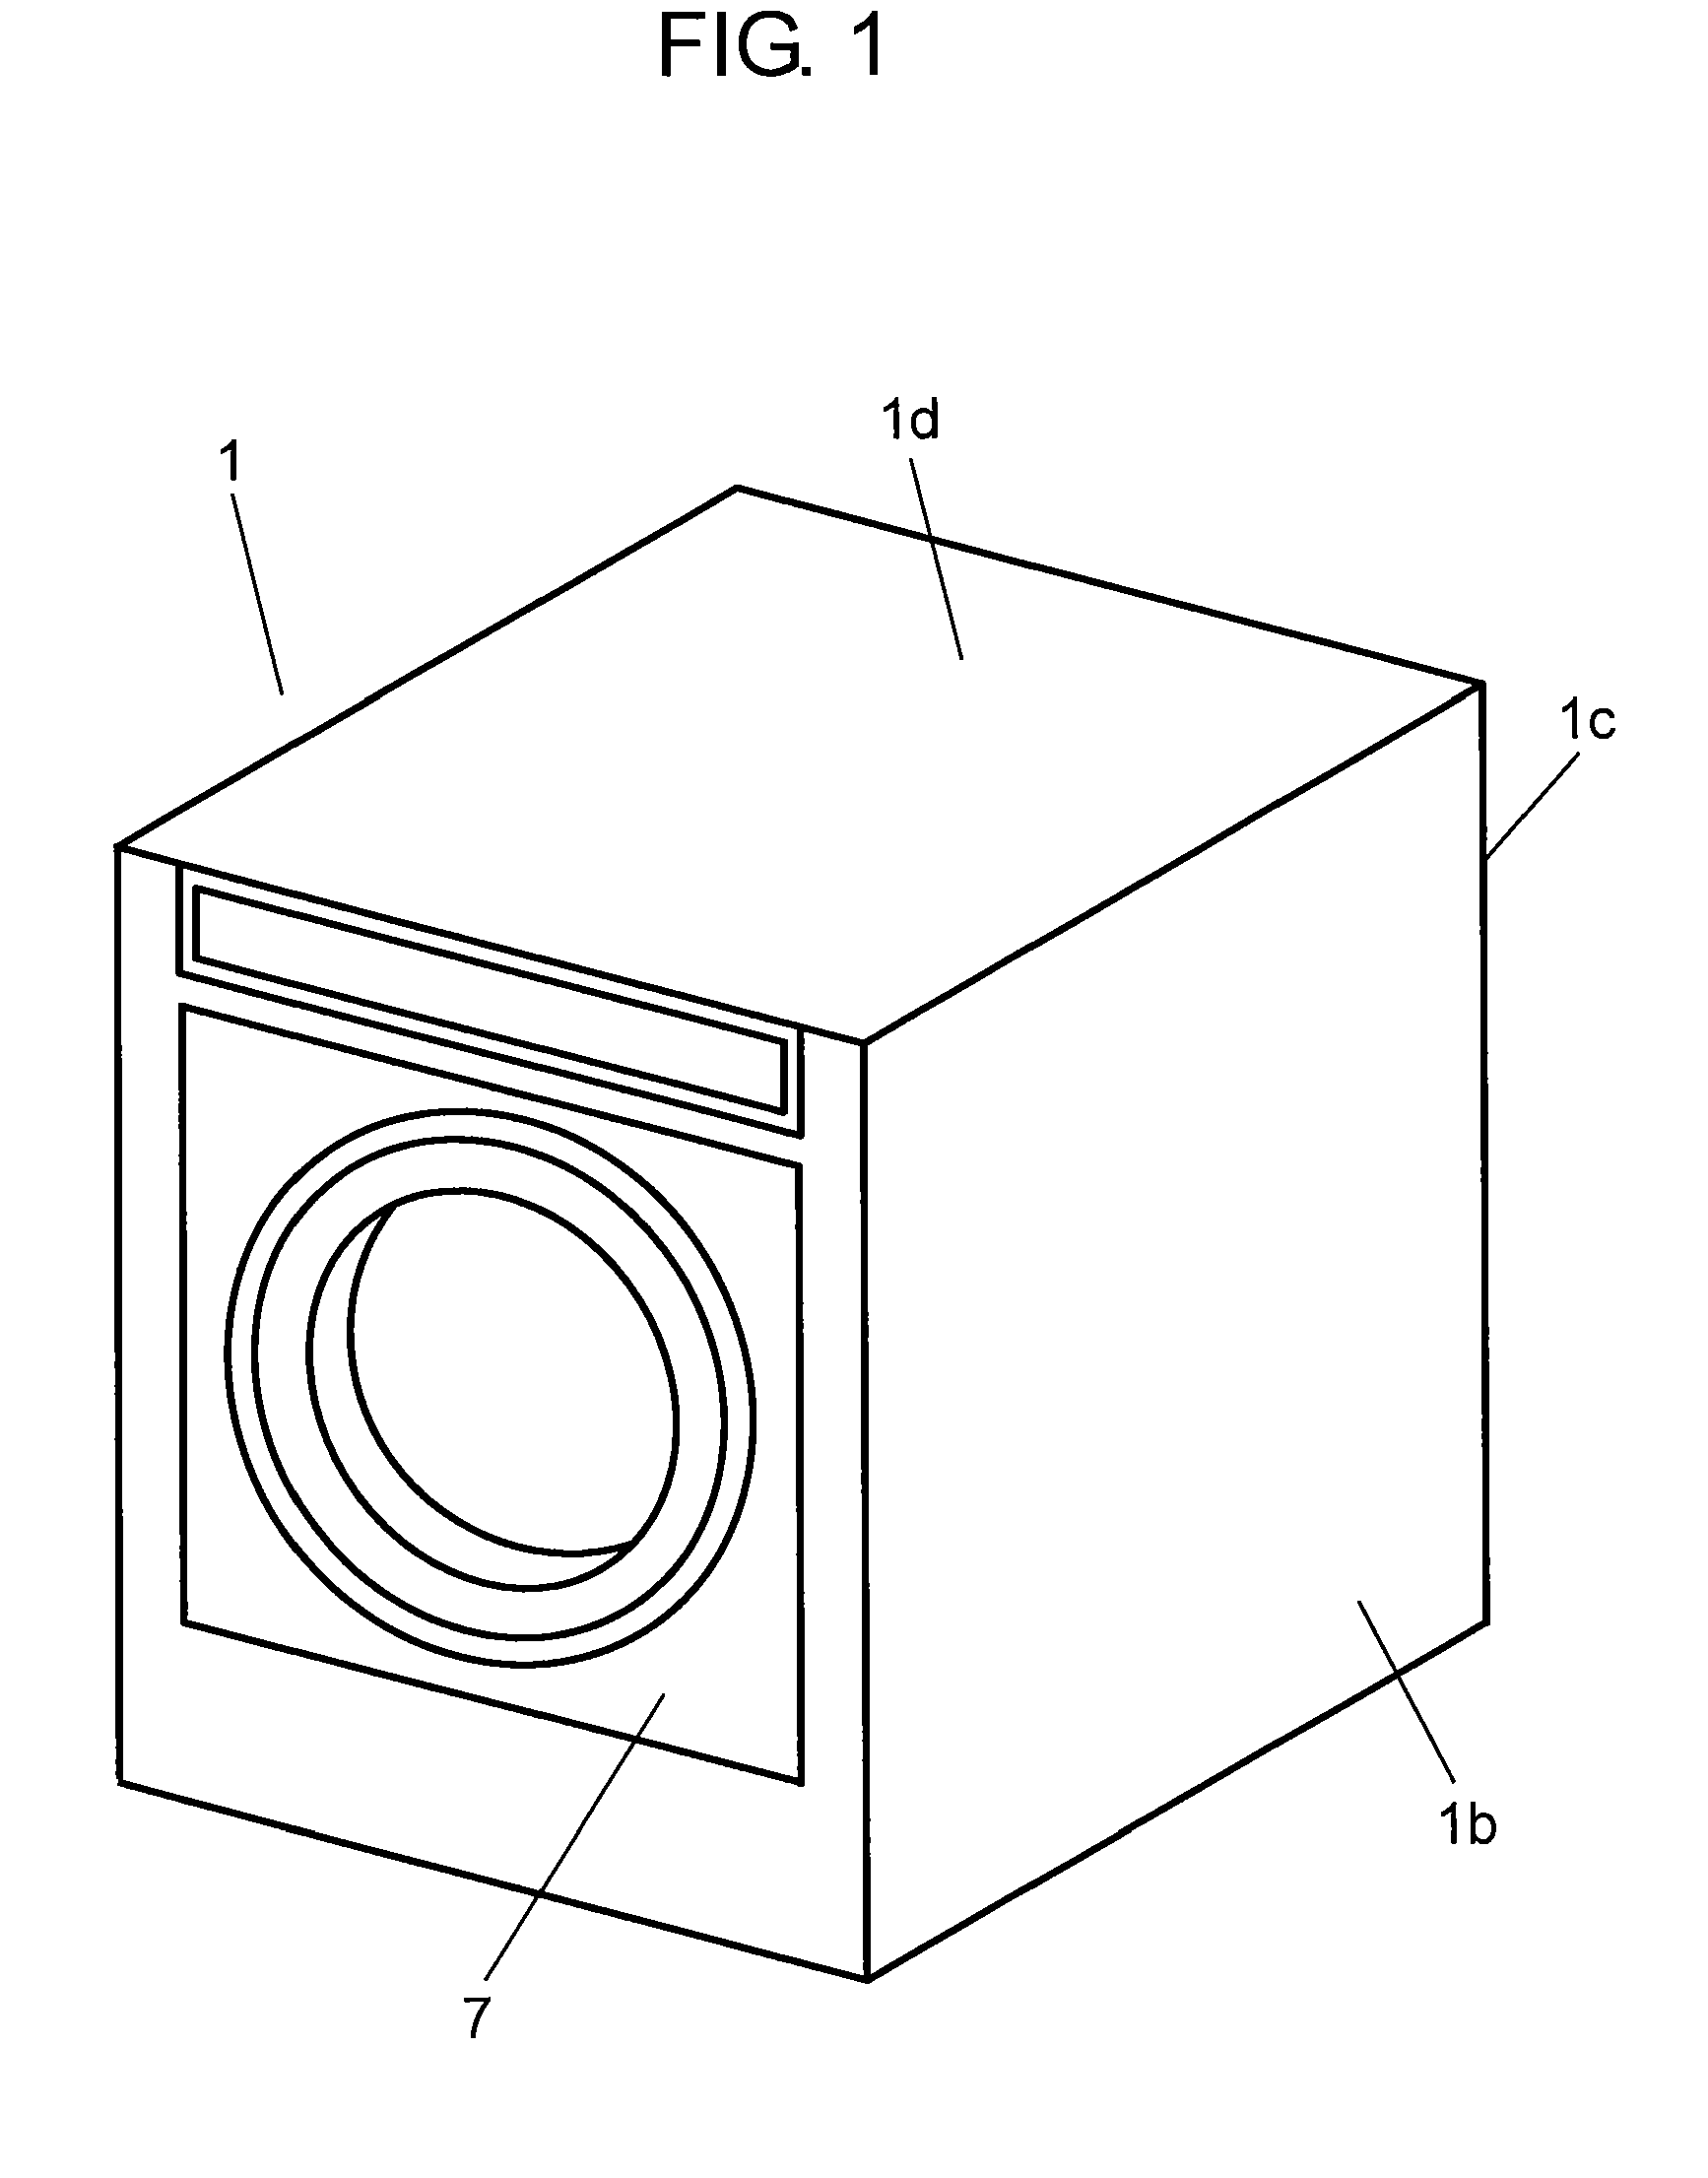 Cloth dryer